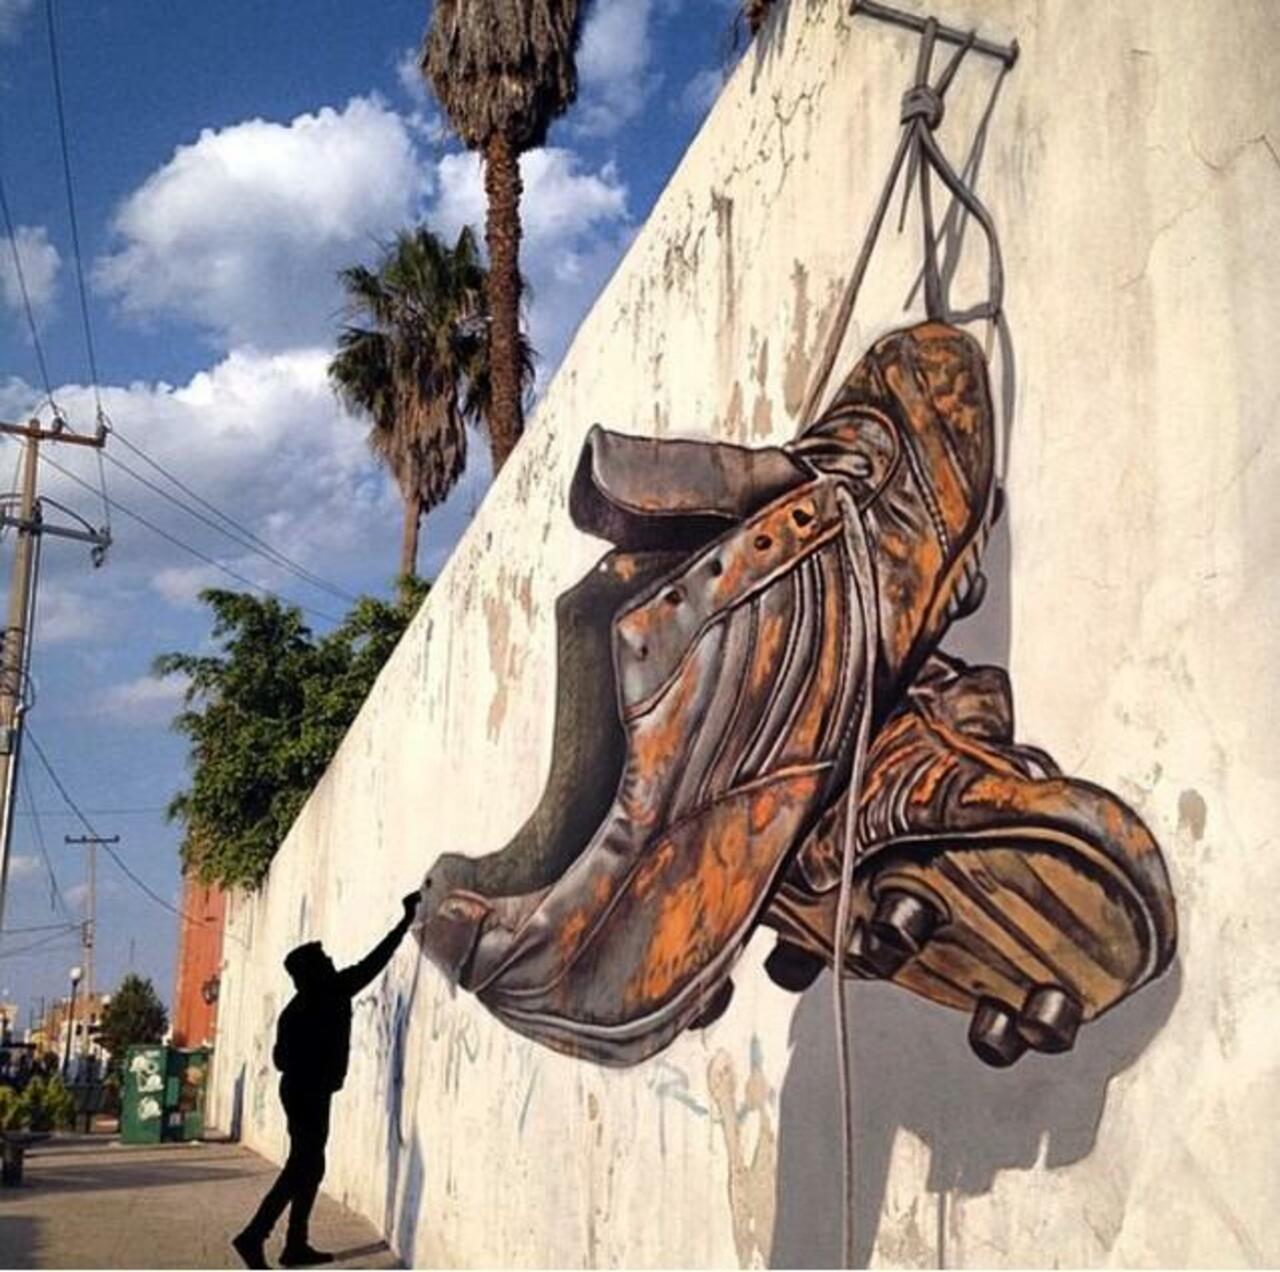 " @GoogleStreetArt Awesome anamorphic 3D Street Art by
Juandres Vera #art #graffiti #mural
#streetart http://t.co/sjyrwStO7n